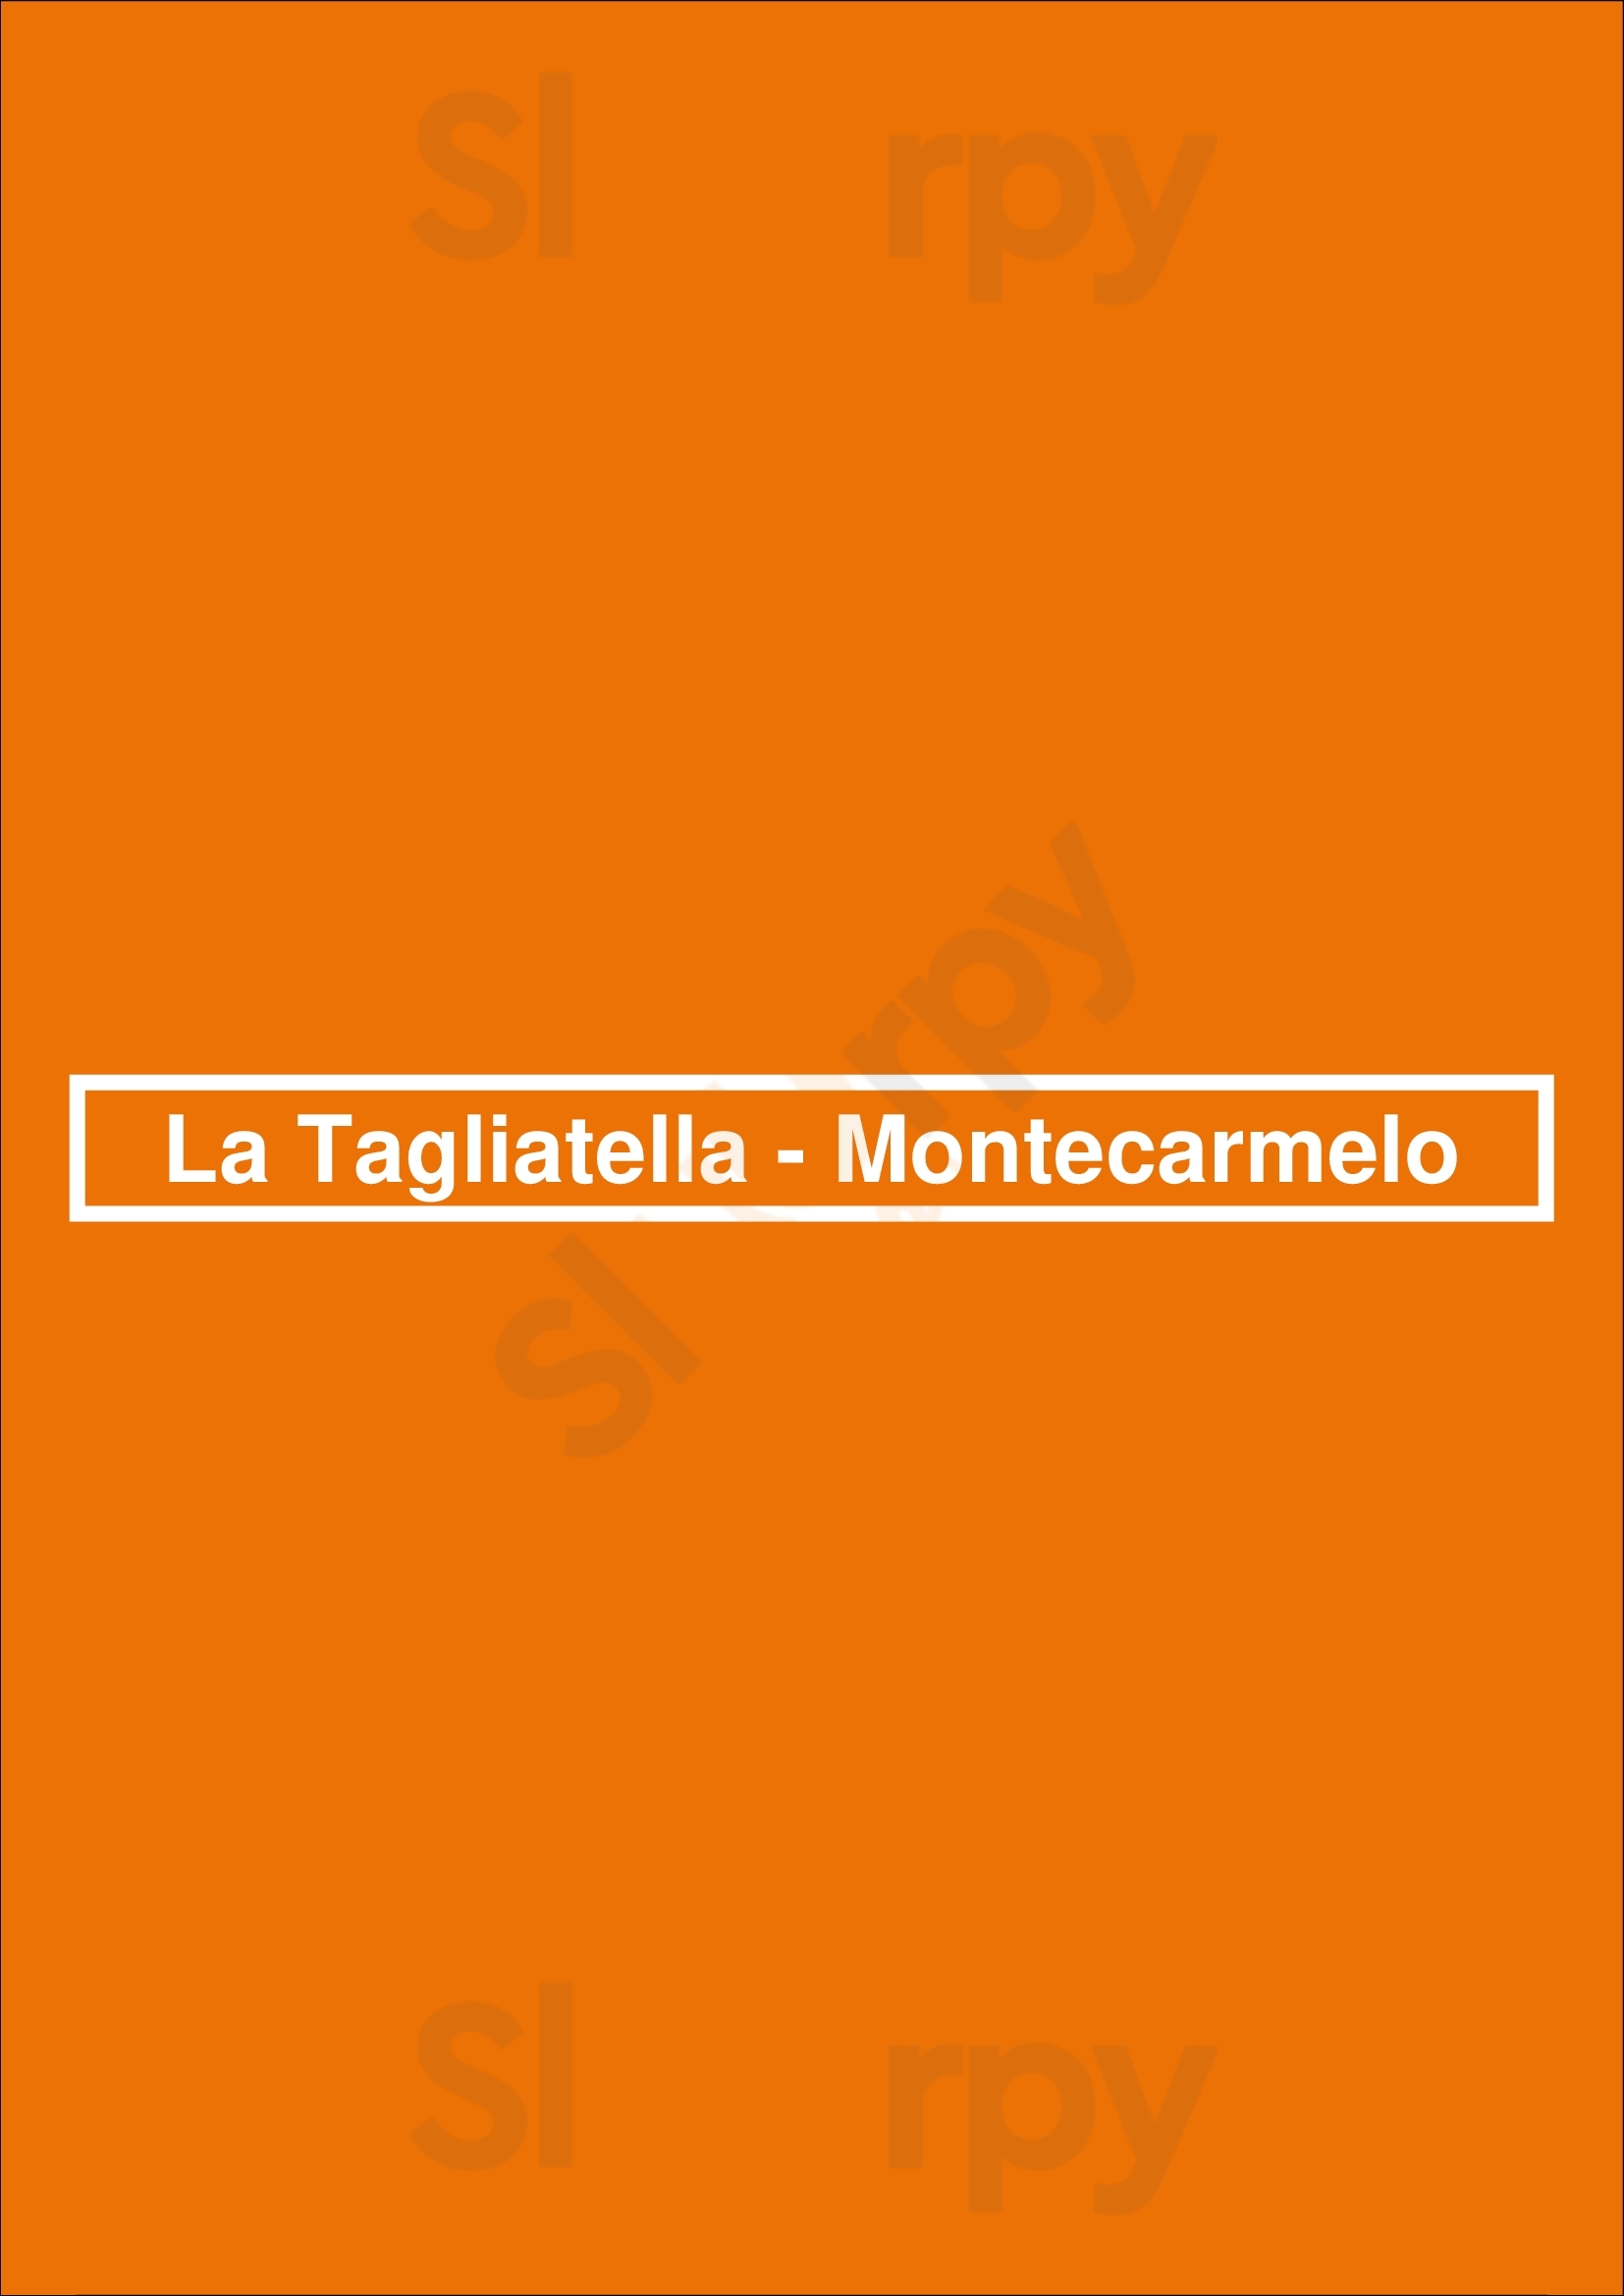 La Tagliatella - Montecarmelo Madrid Menu - 1